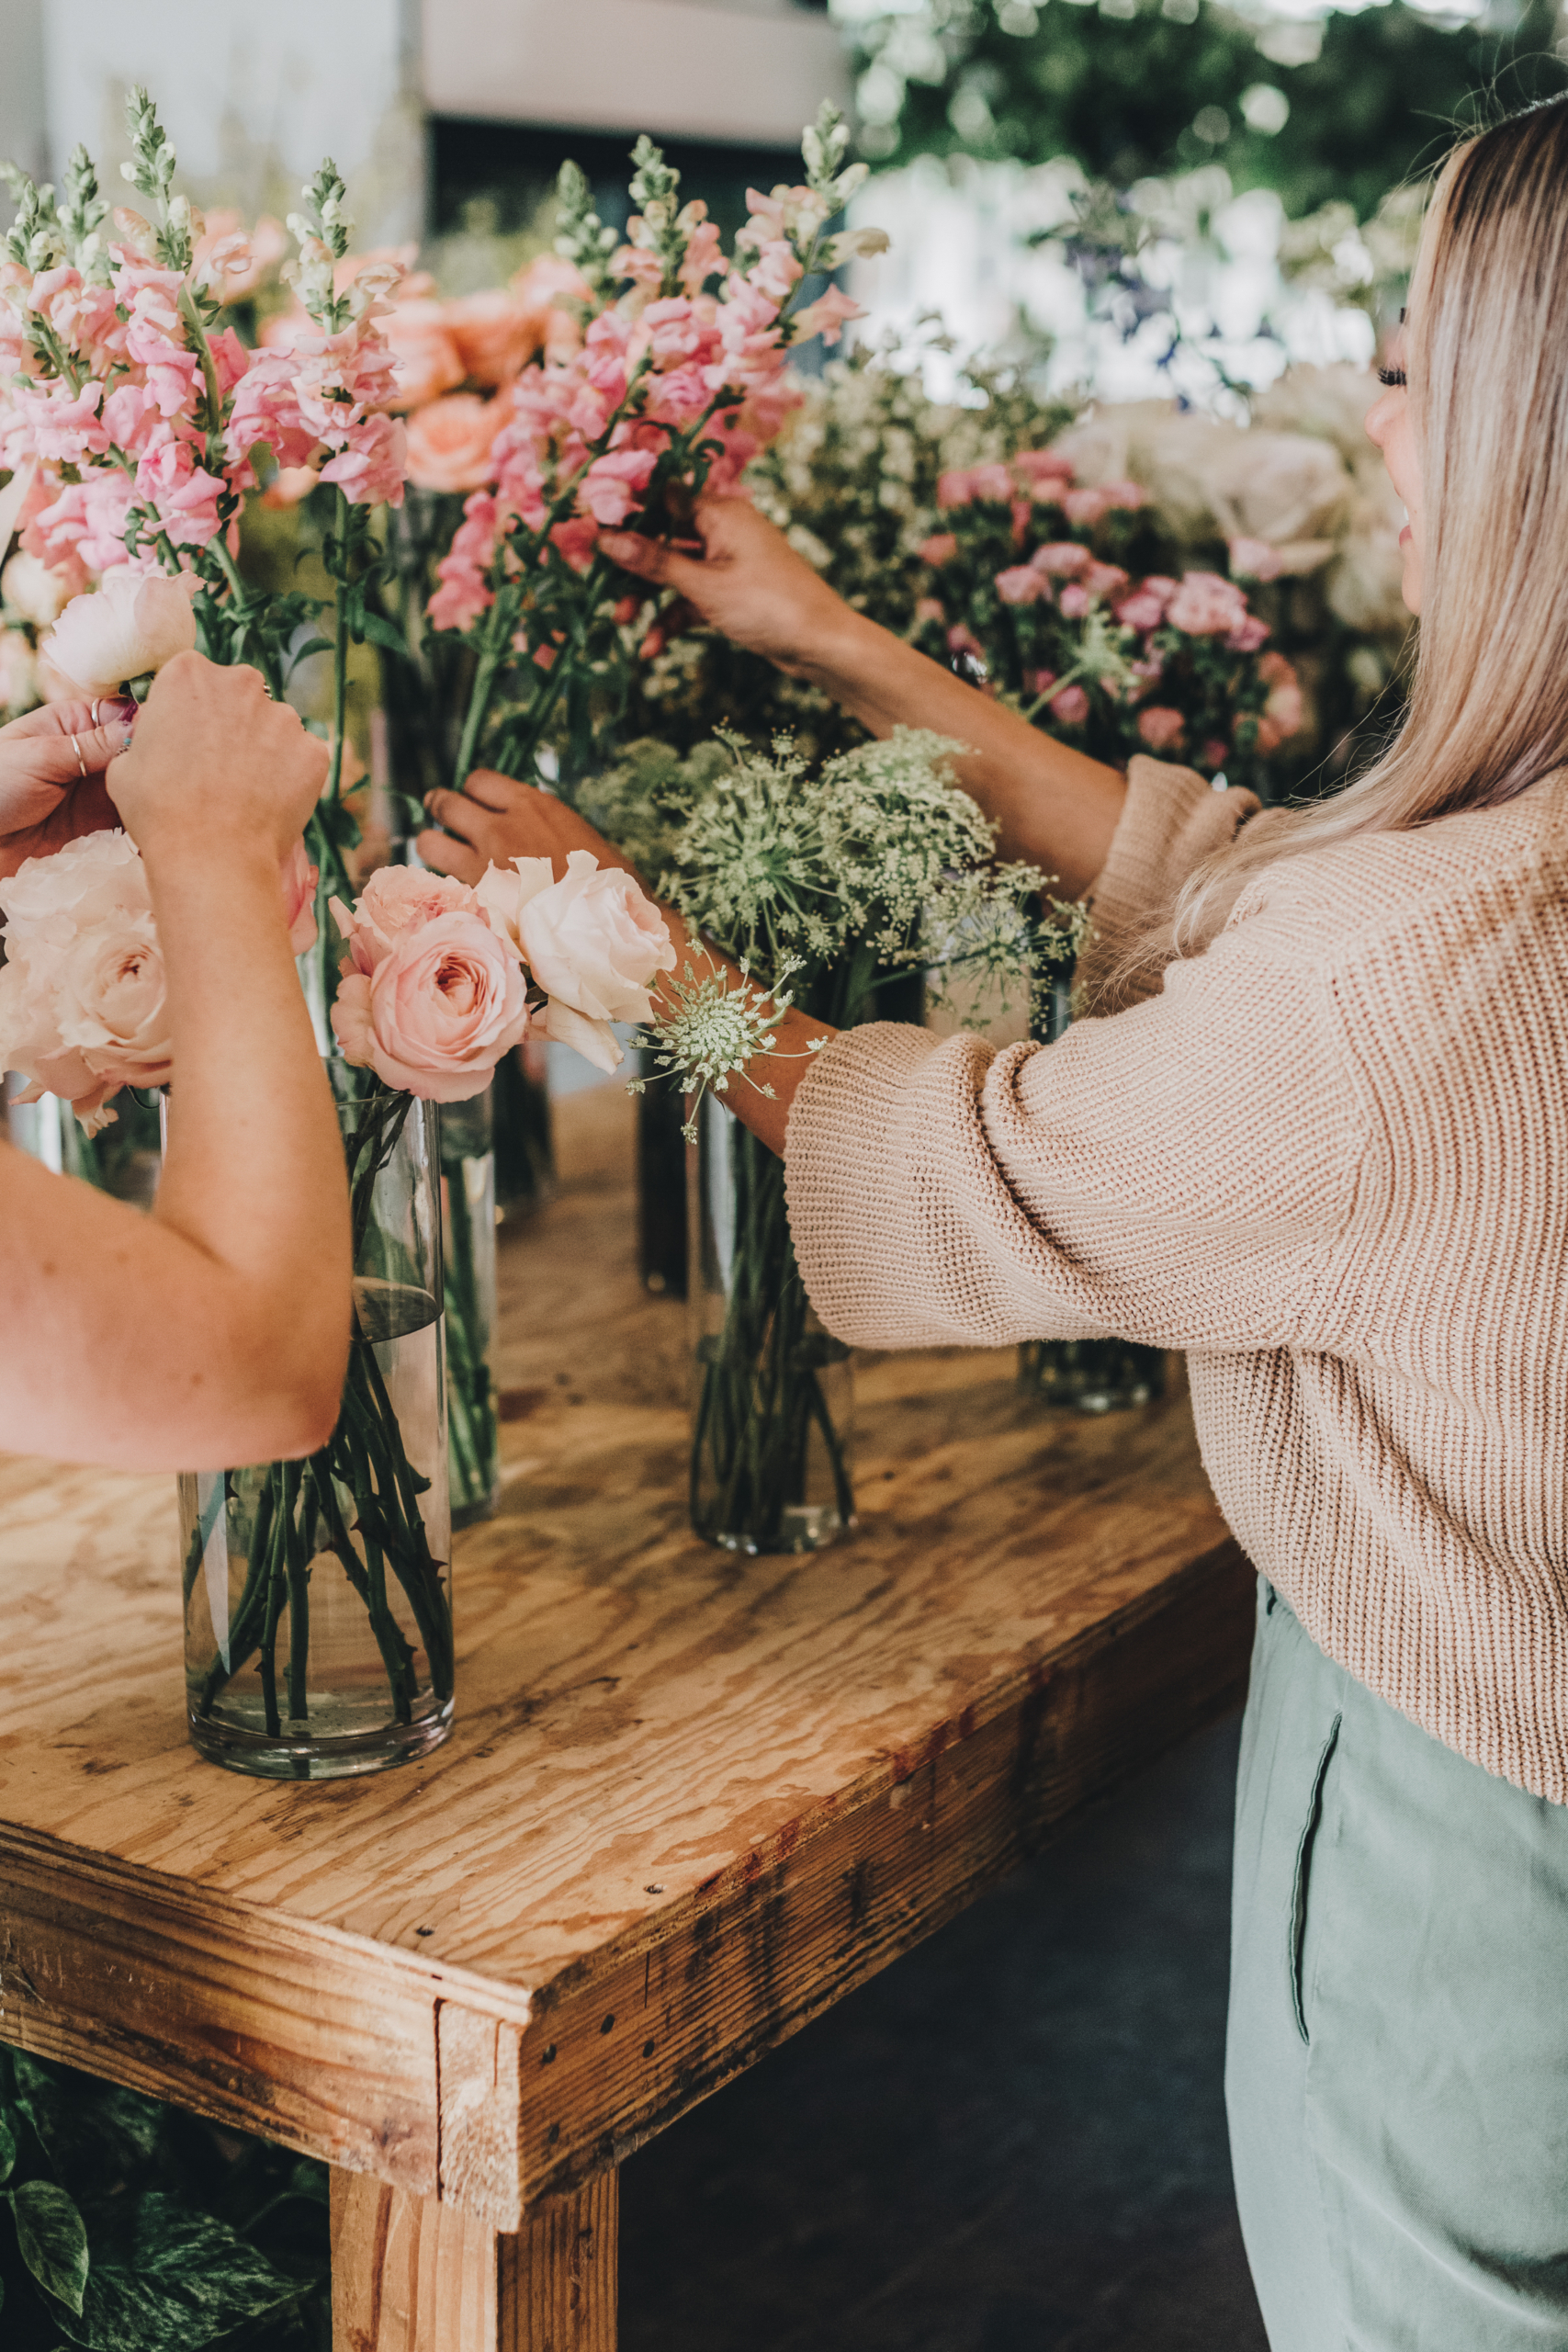 non descript women arranging vases of flowers